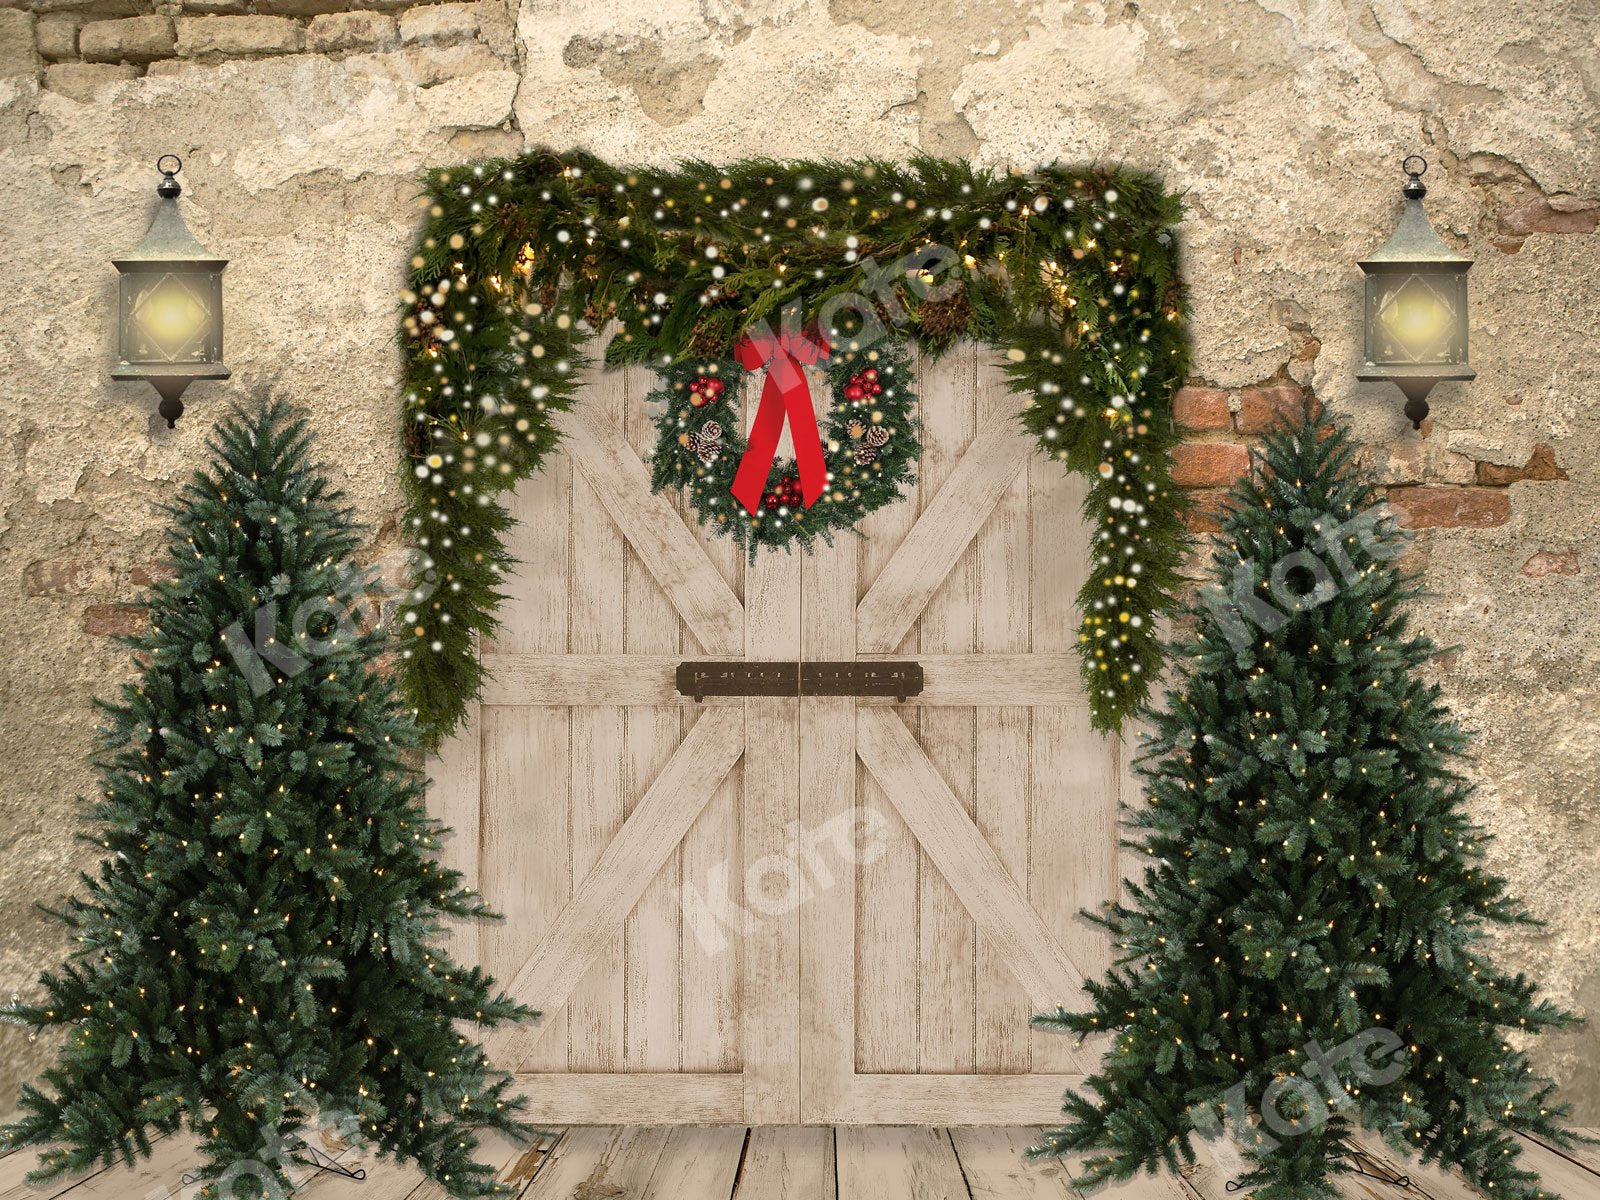 Kate Christmas Backdrop Brick Wall Door & Xmas Trees Designed By JS Photography